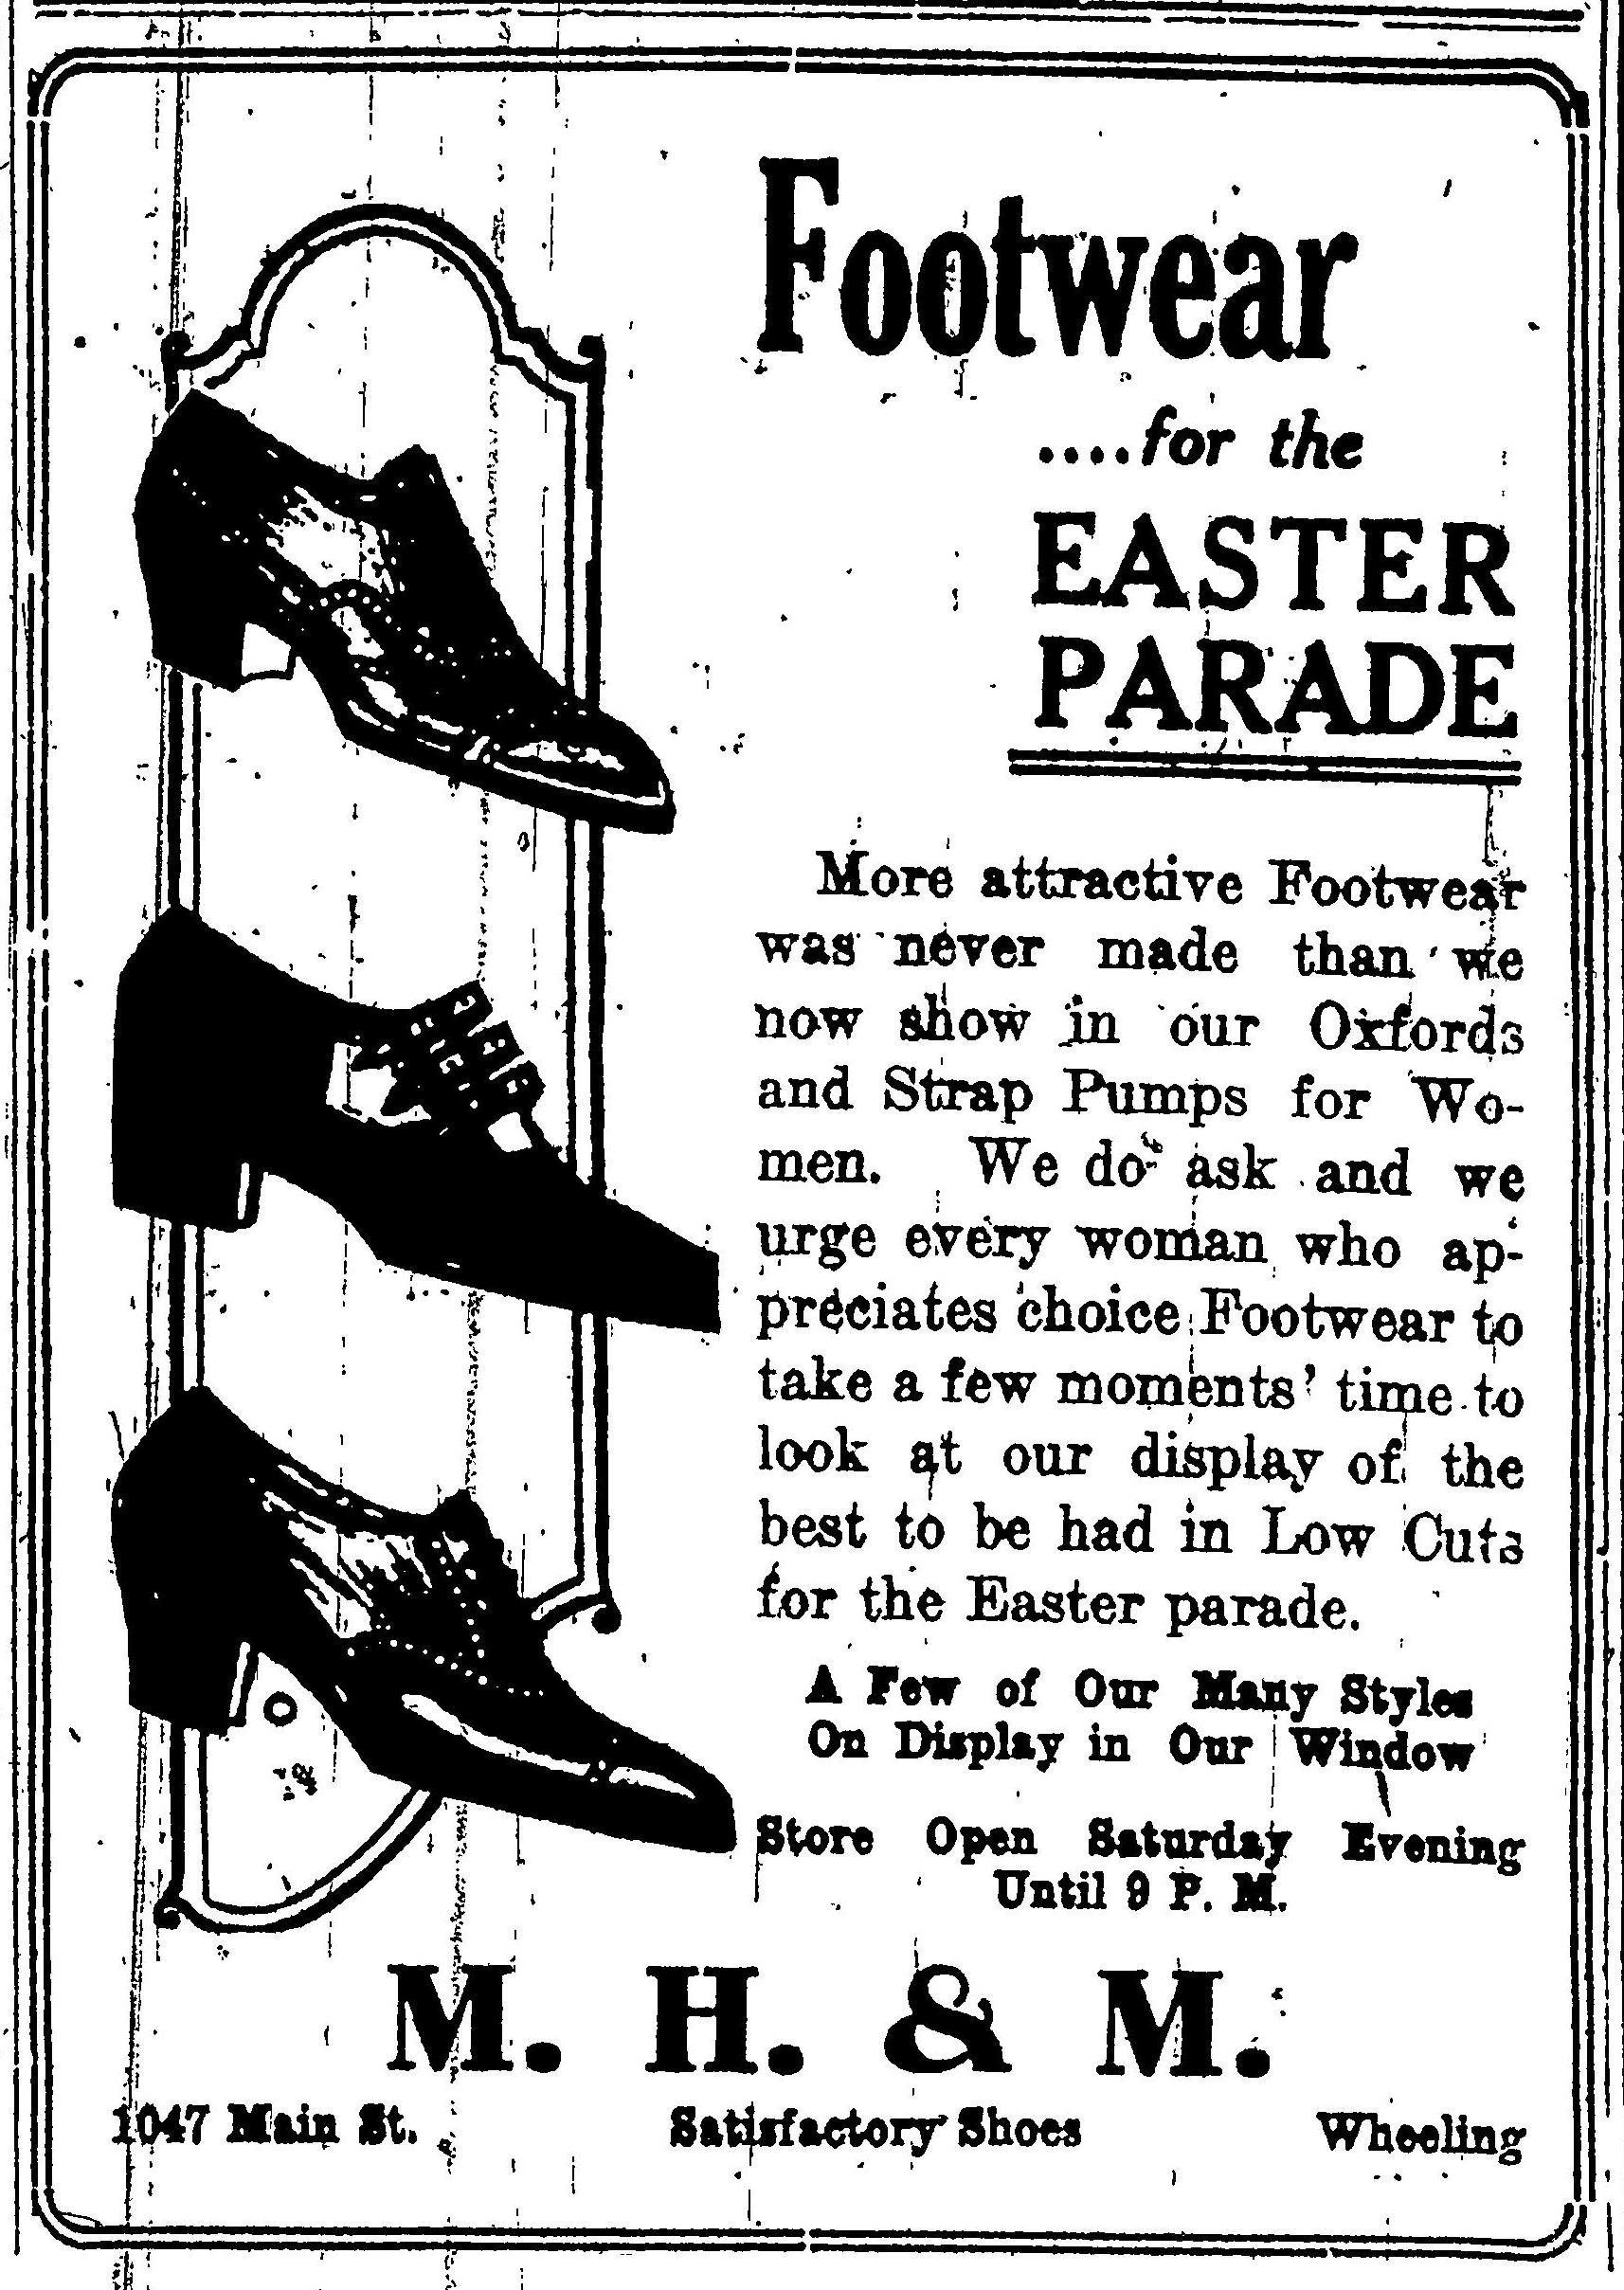 M.H. & M. Satisfactory Shoes - Wheeling Intelligencer, April 15, 1922